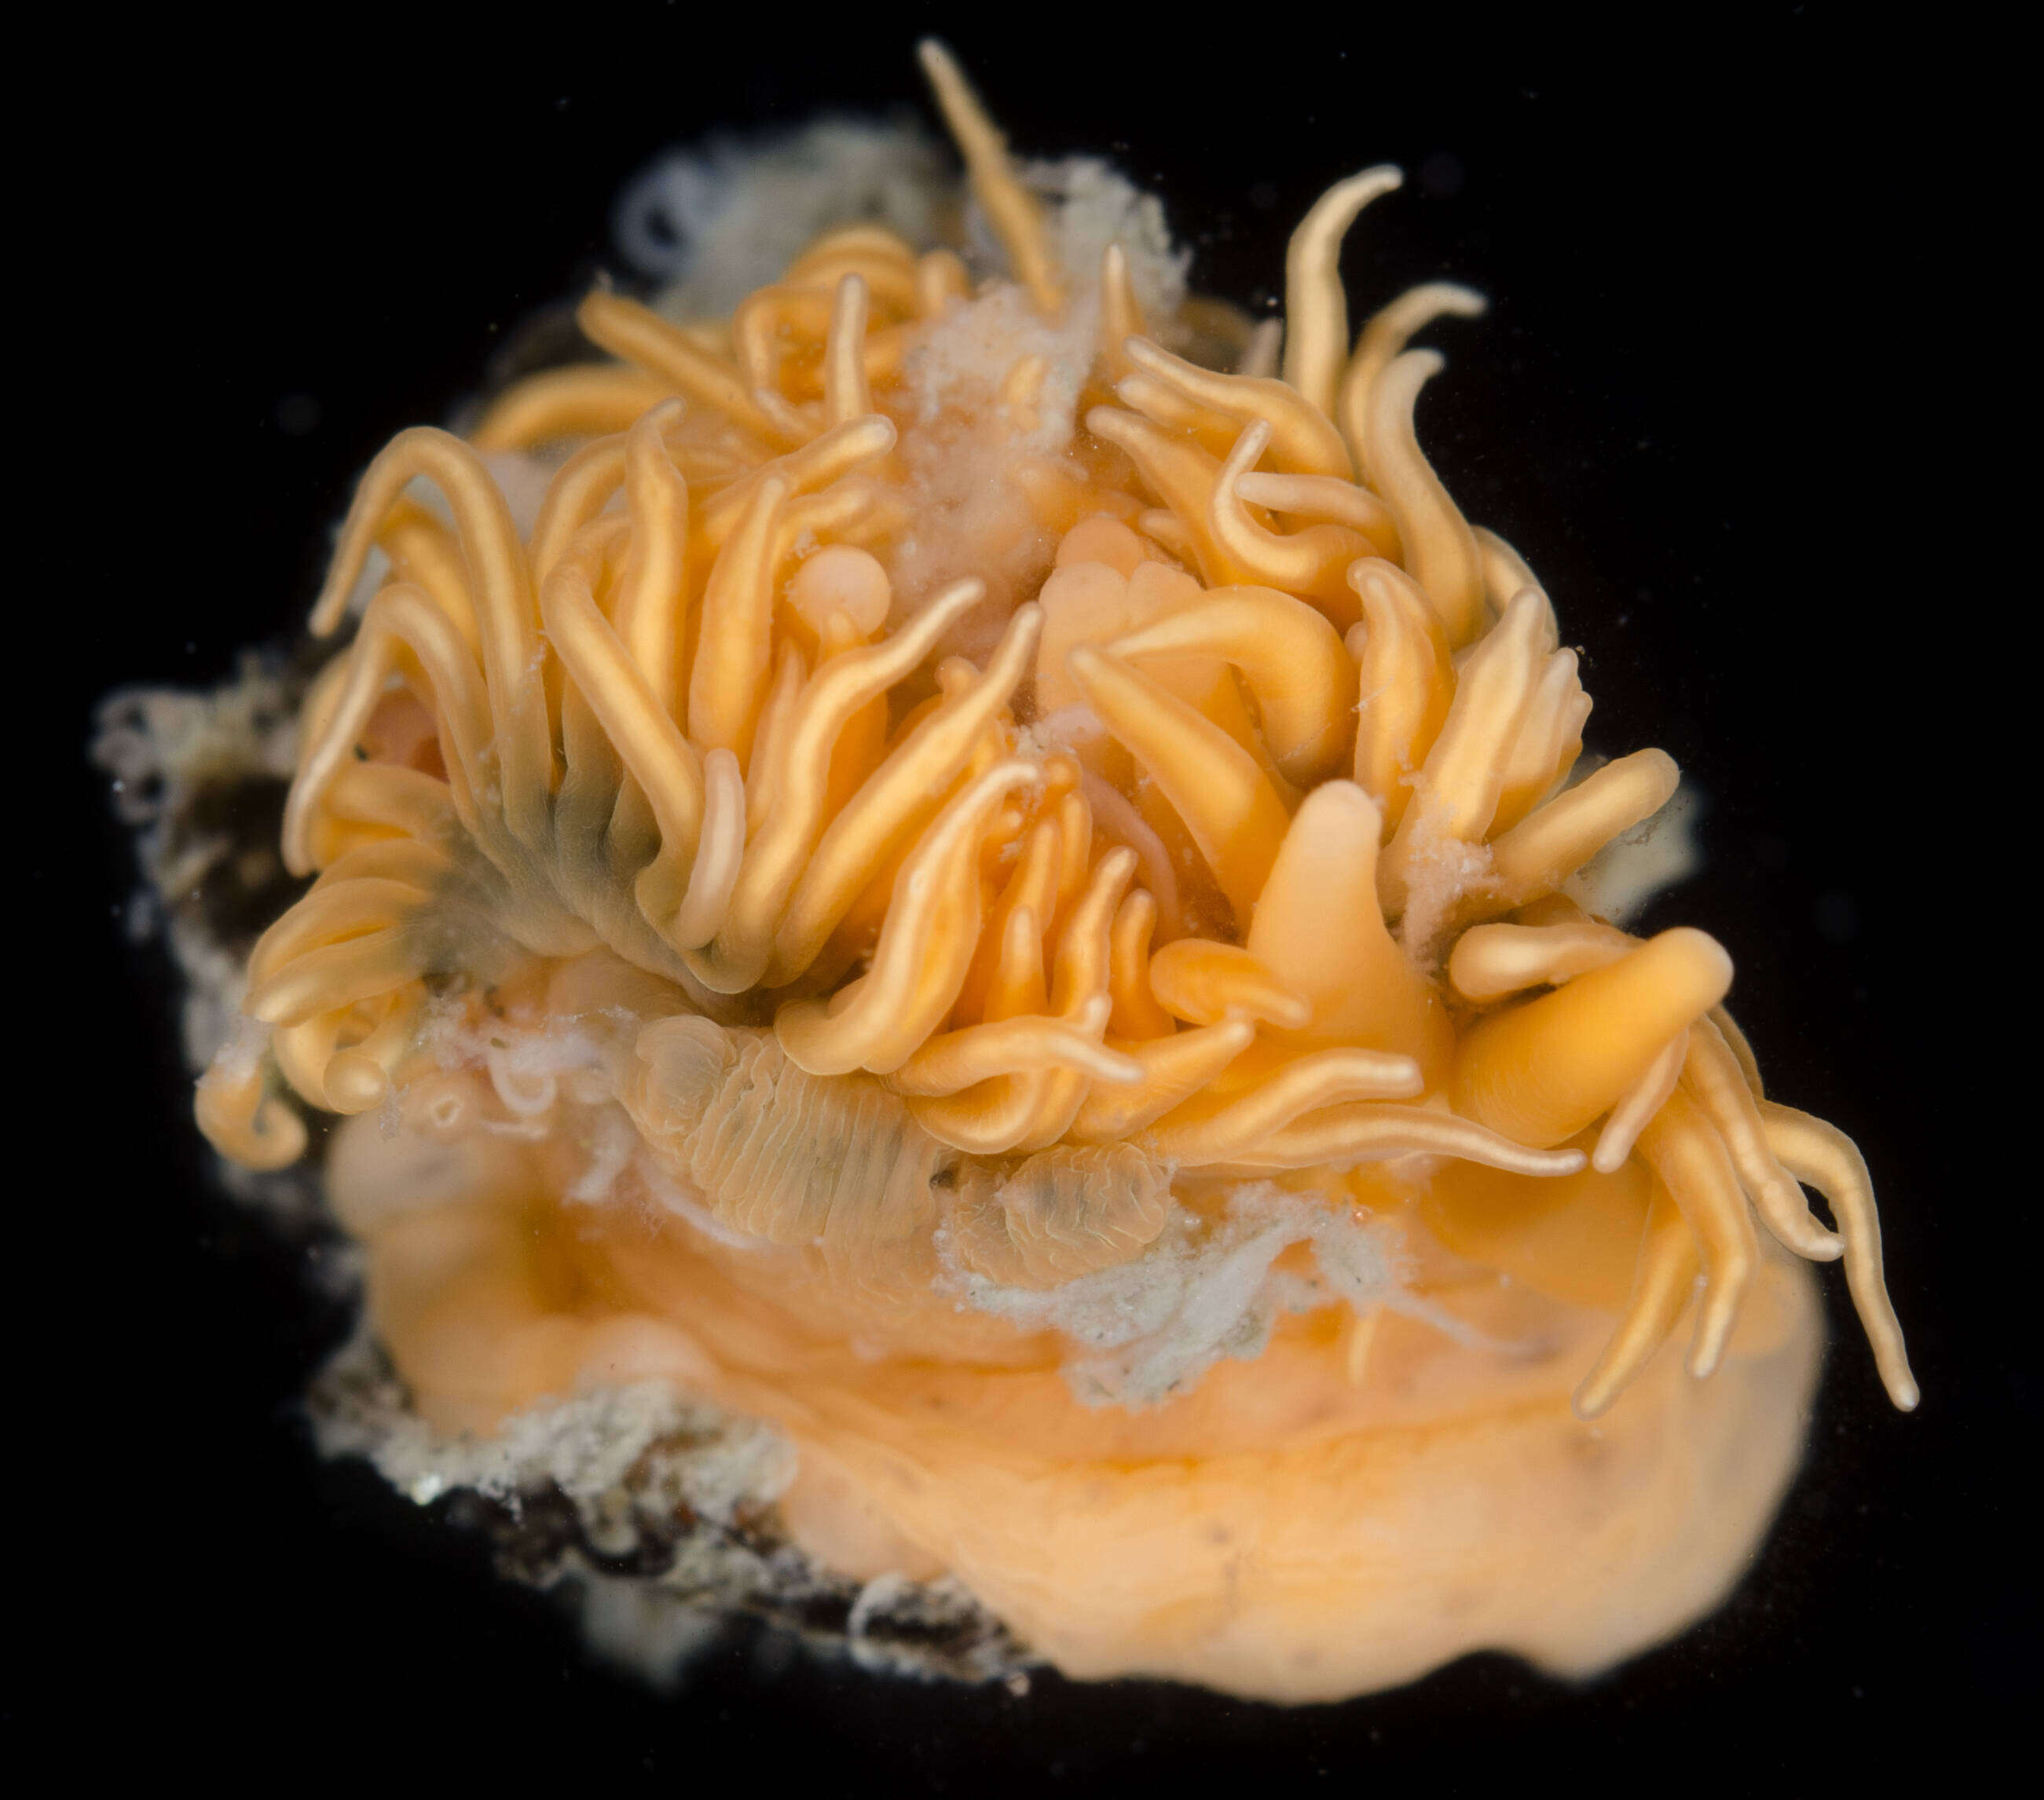 Image of White anemone